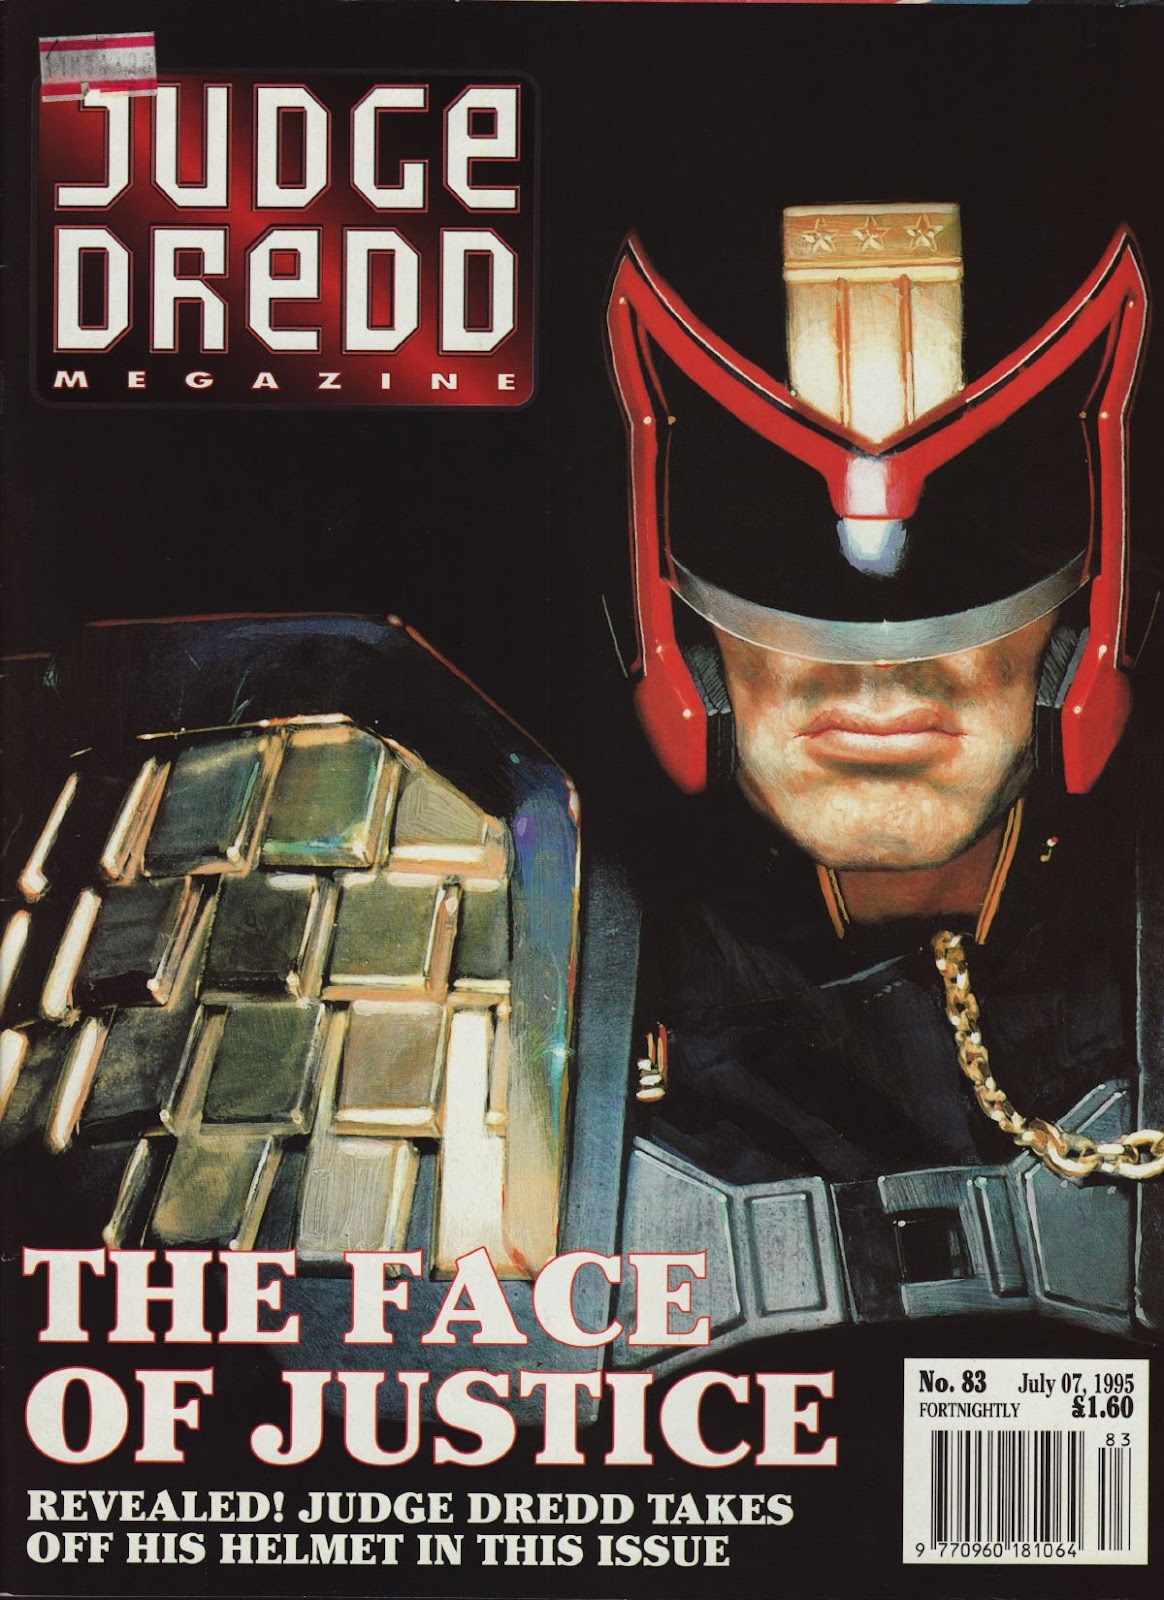 Judge Dredd: The Megazine (vol. 2) issue 83 - Page 1